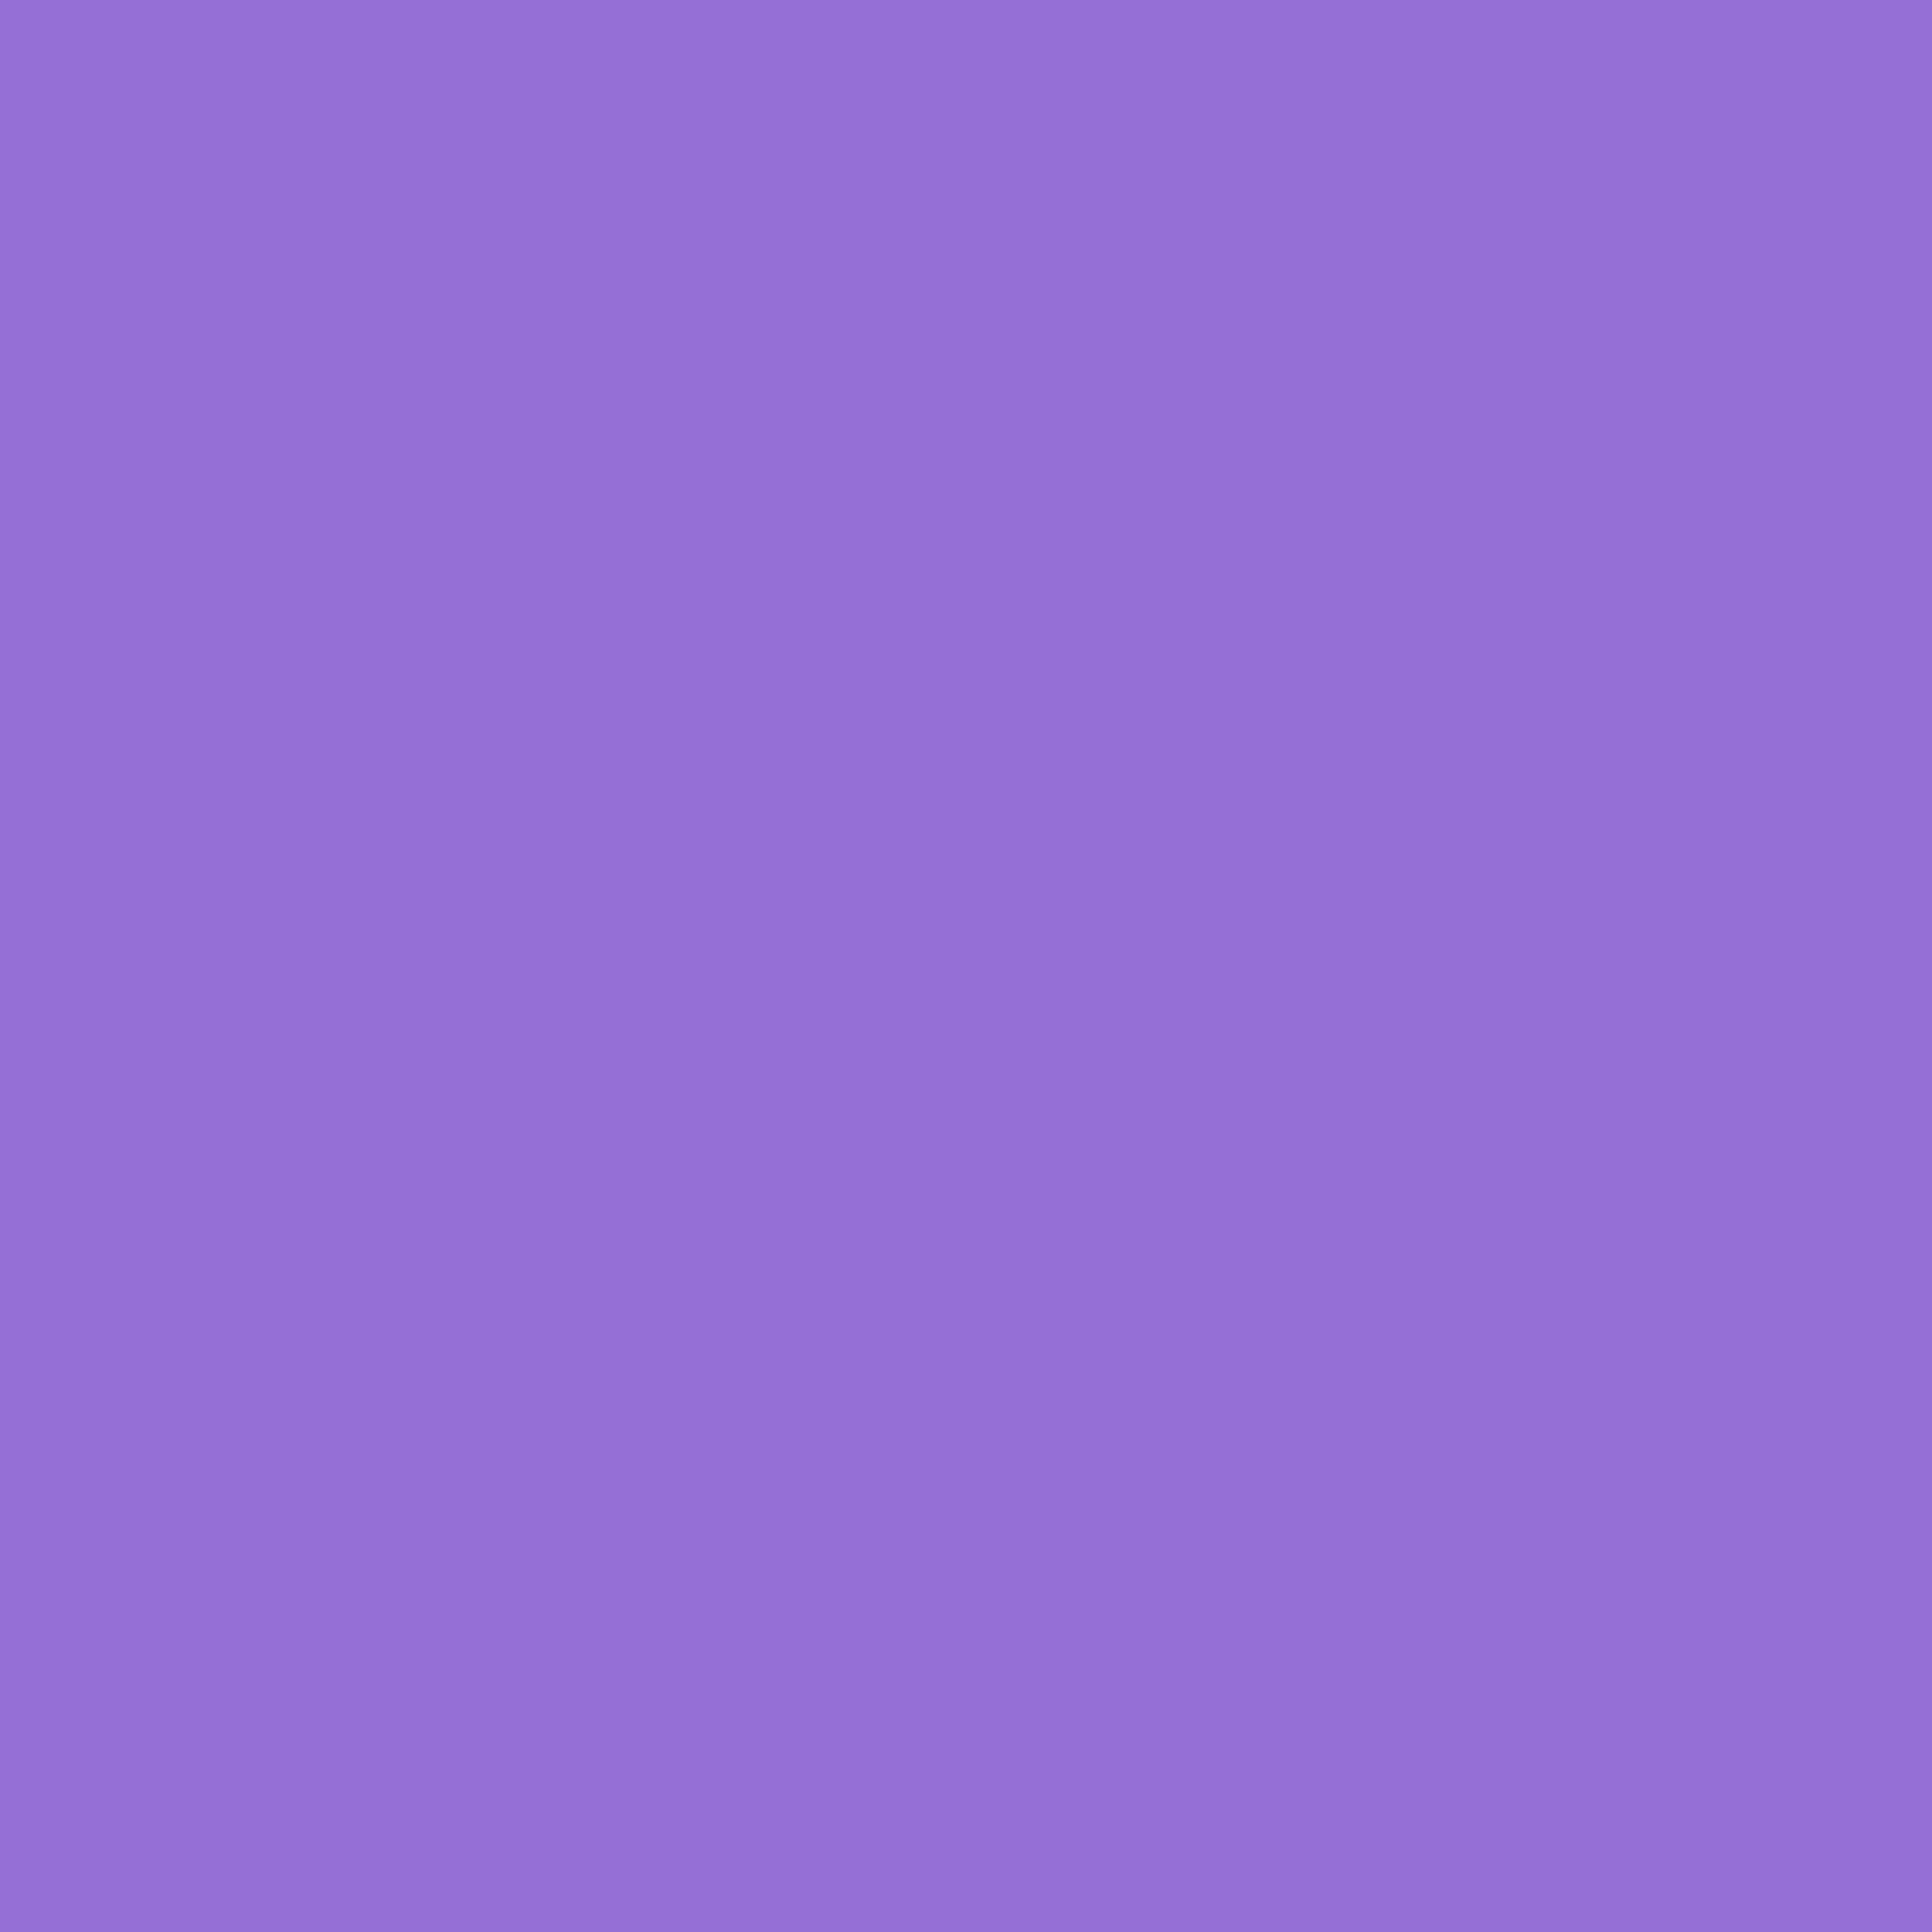 2732X2732 Dark Pastel Purple Solid Color Background